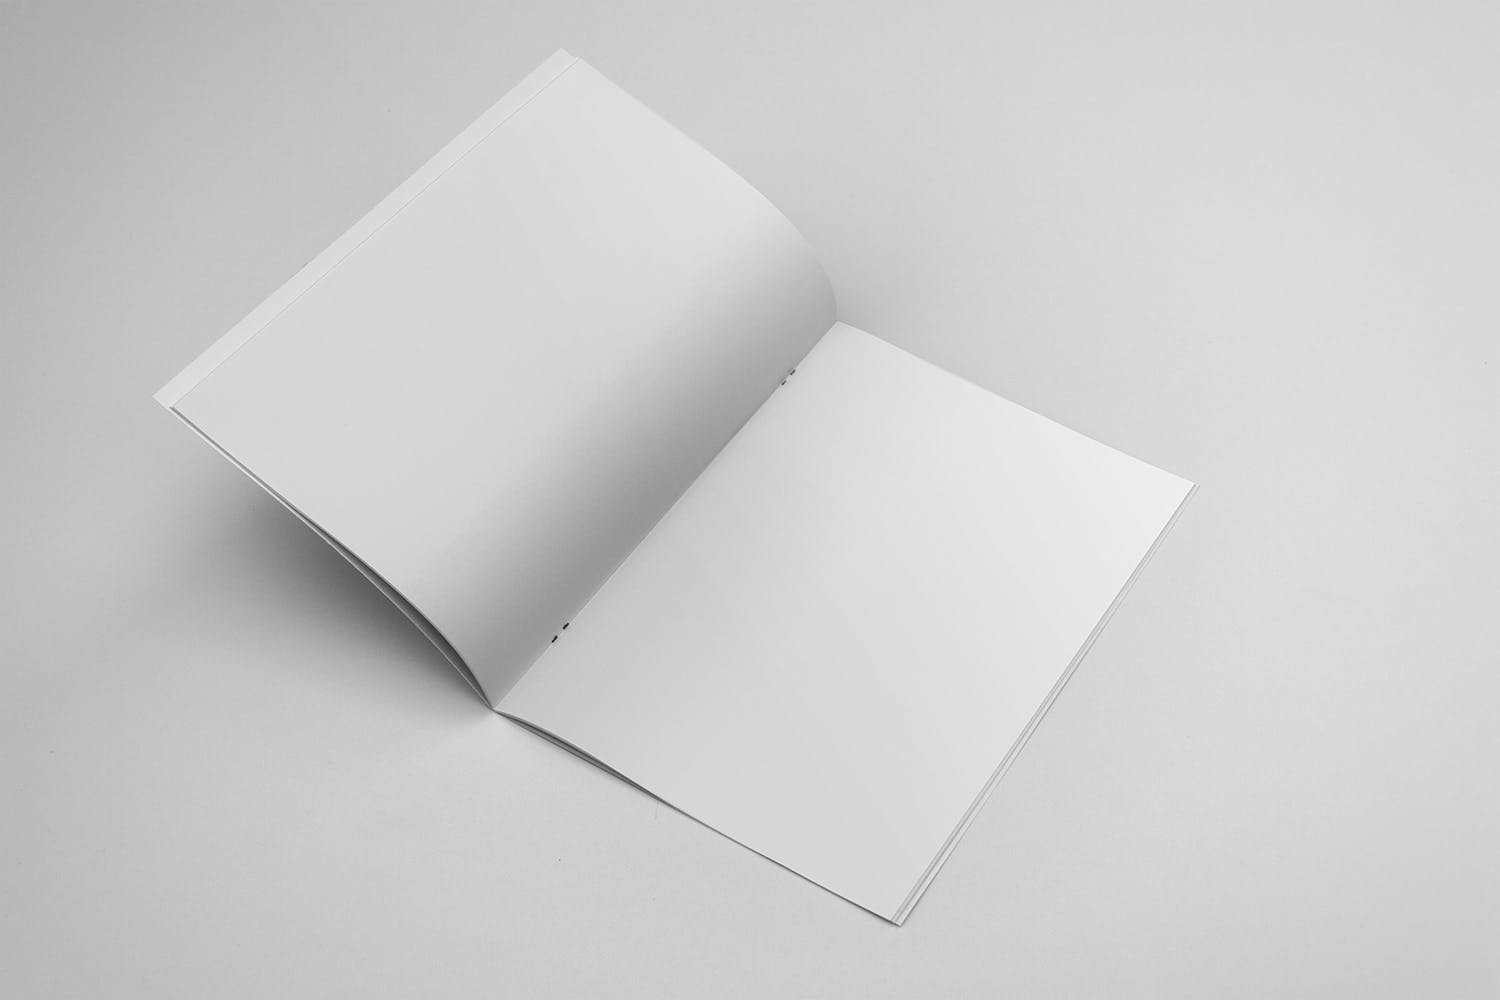 A4尺寸企业/品牌宣传册折叠页效果图样机非凡图库精选 A4 Brochure Mockup Folded Page插图(1)